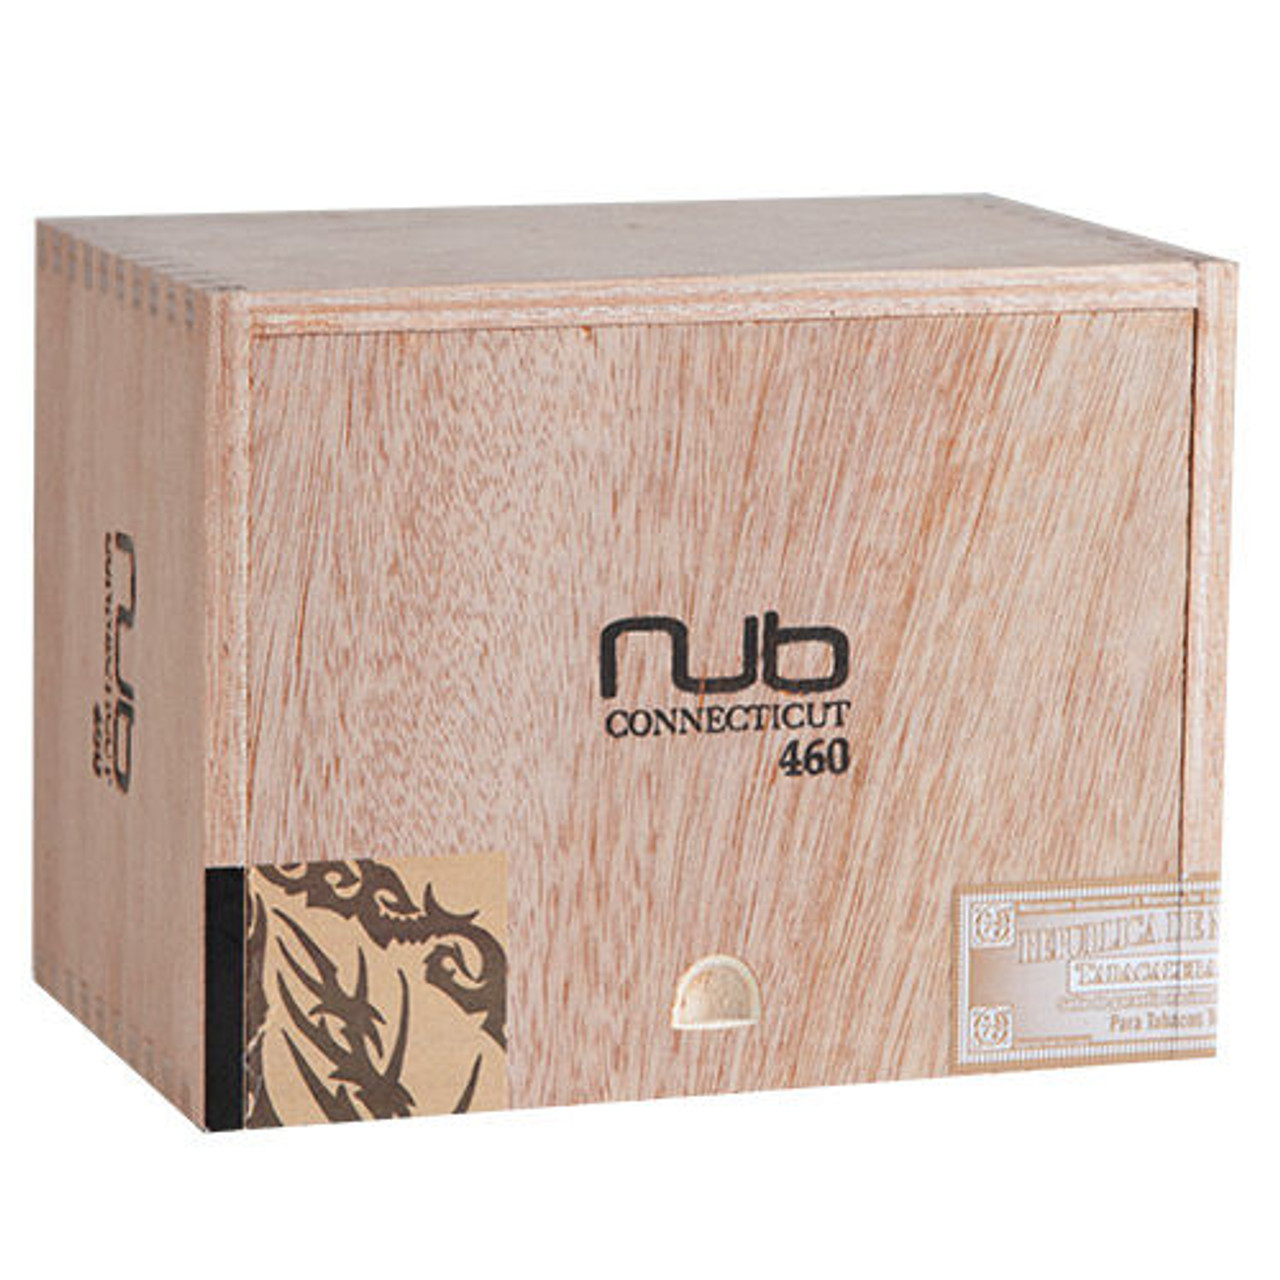 Nub 354 Connecticut Cigars - 3 x 54 (Box of 24) *Box